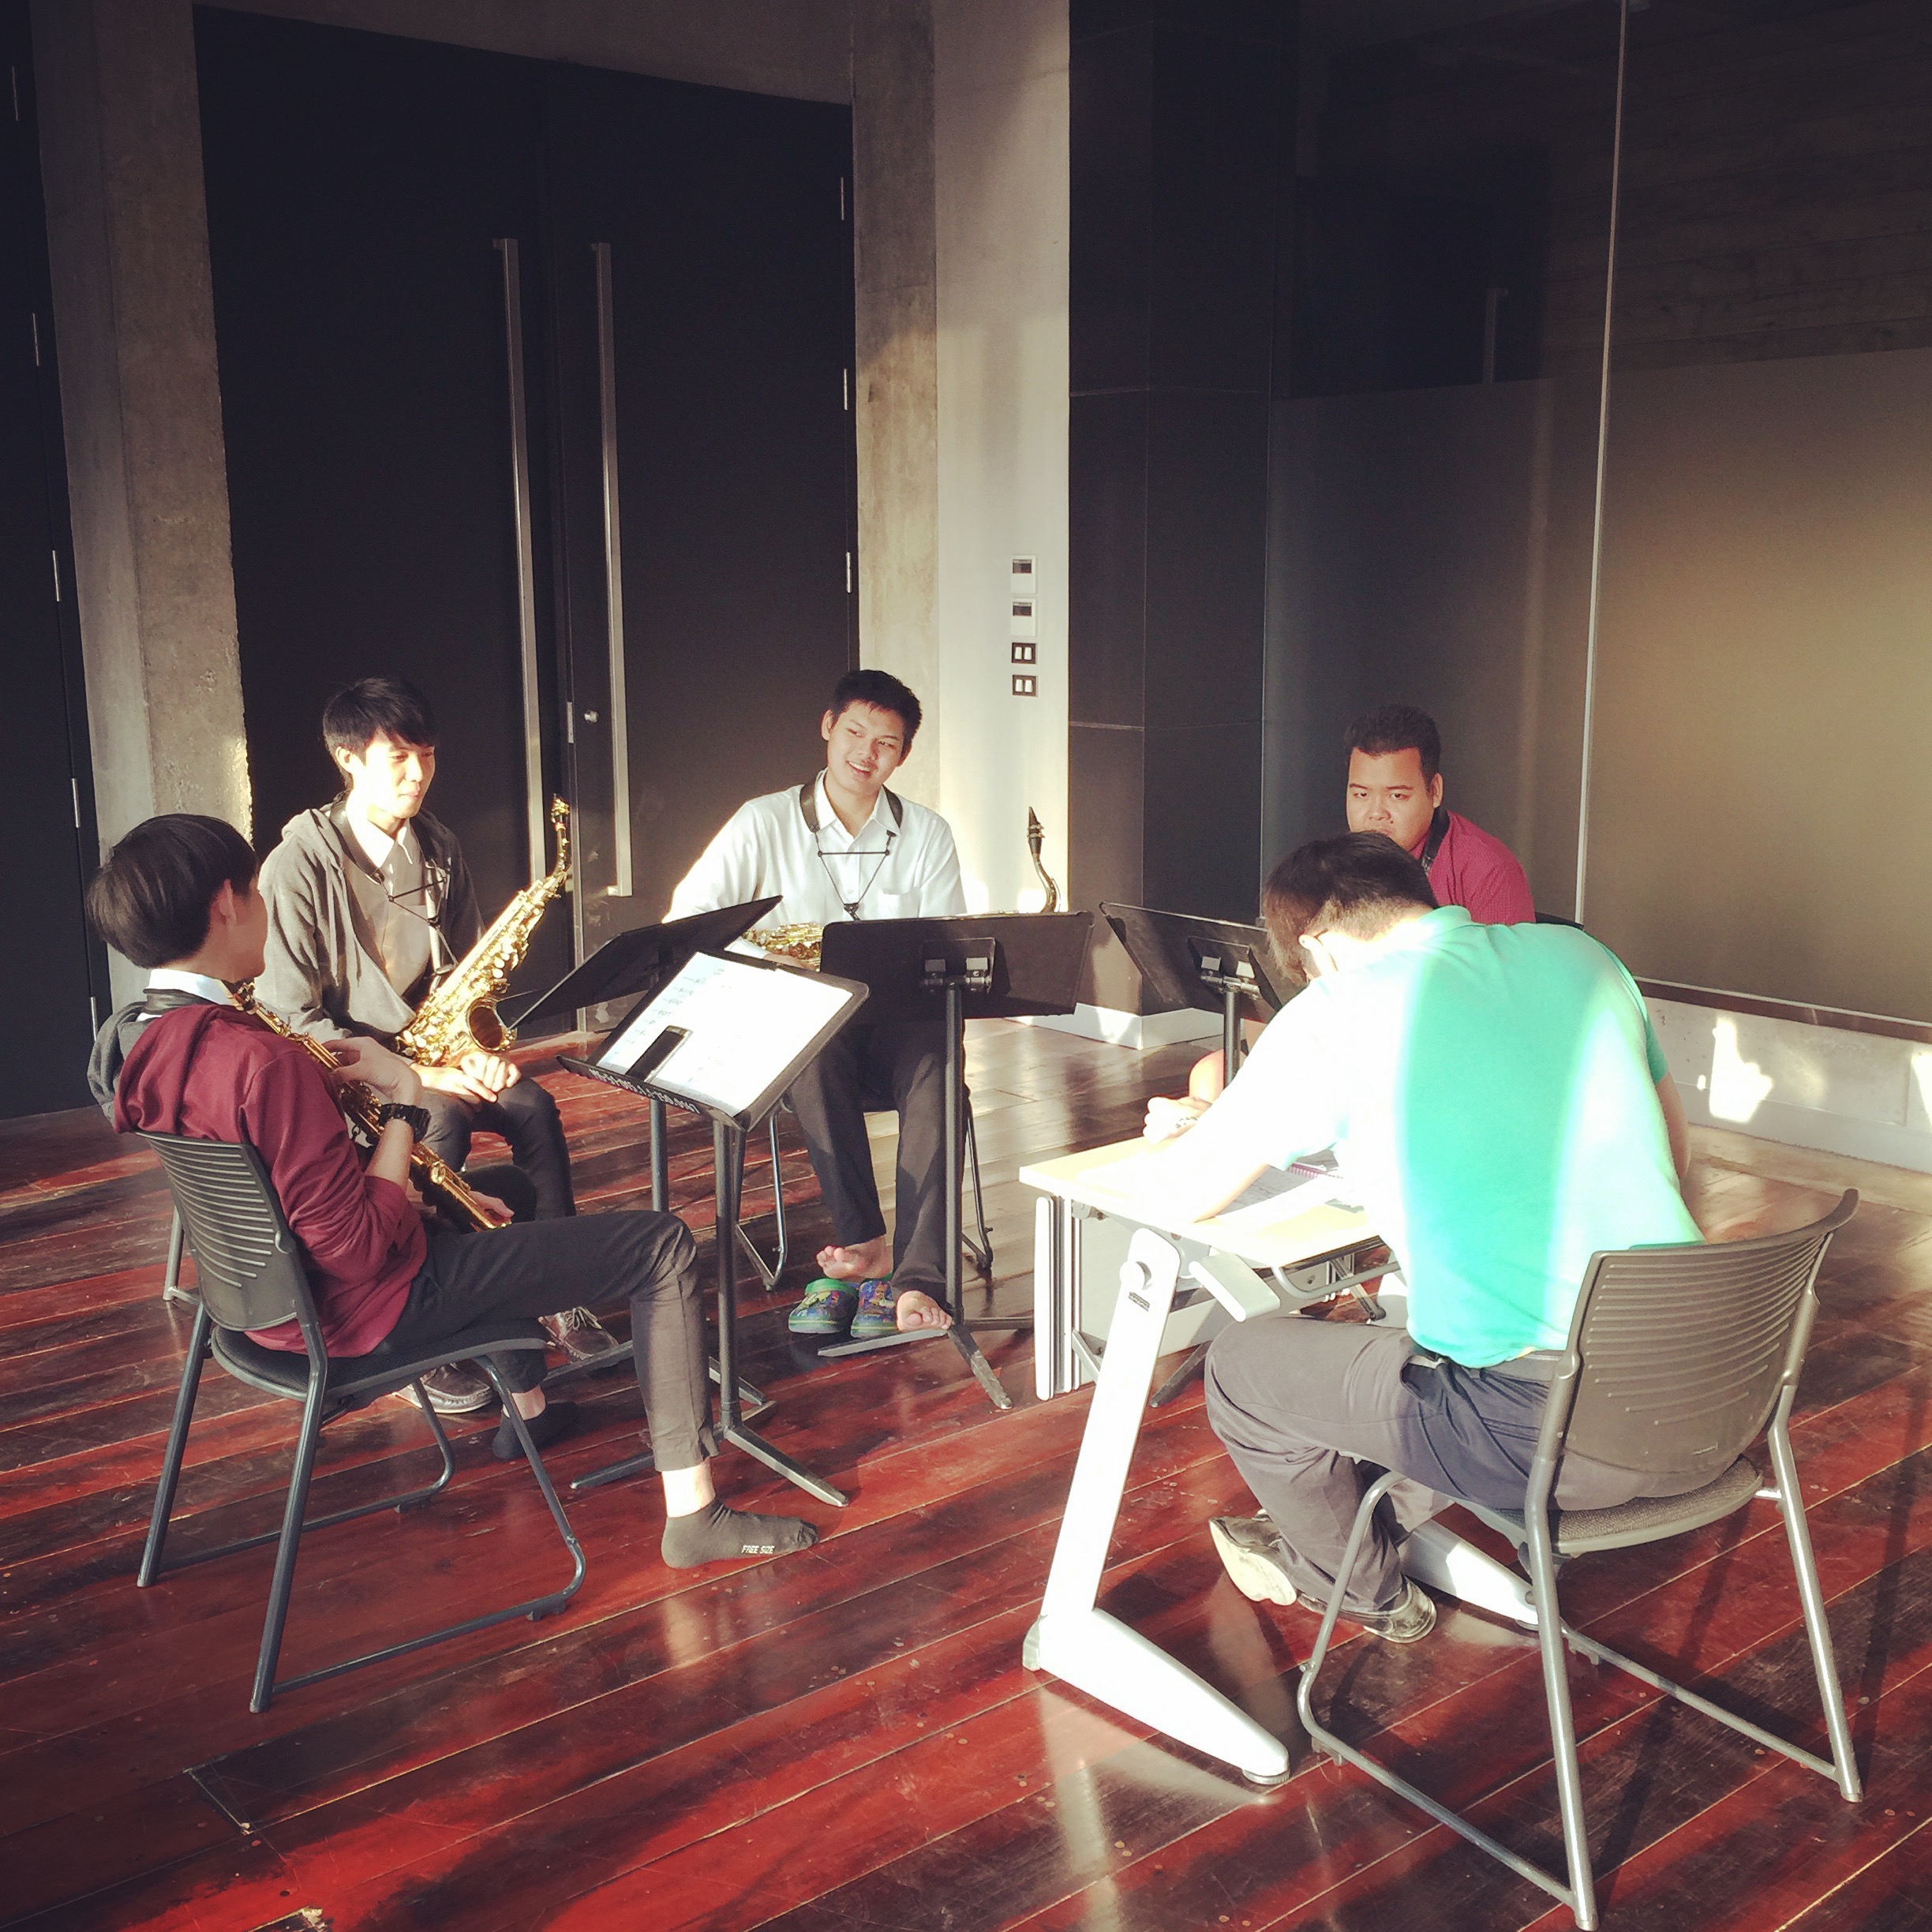 Student musicians rehearsing at Mahidol University’s College of Music